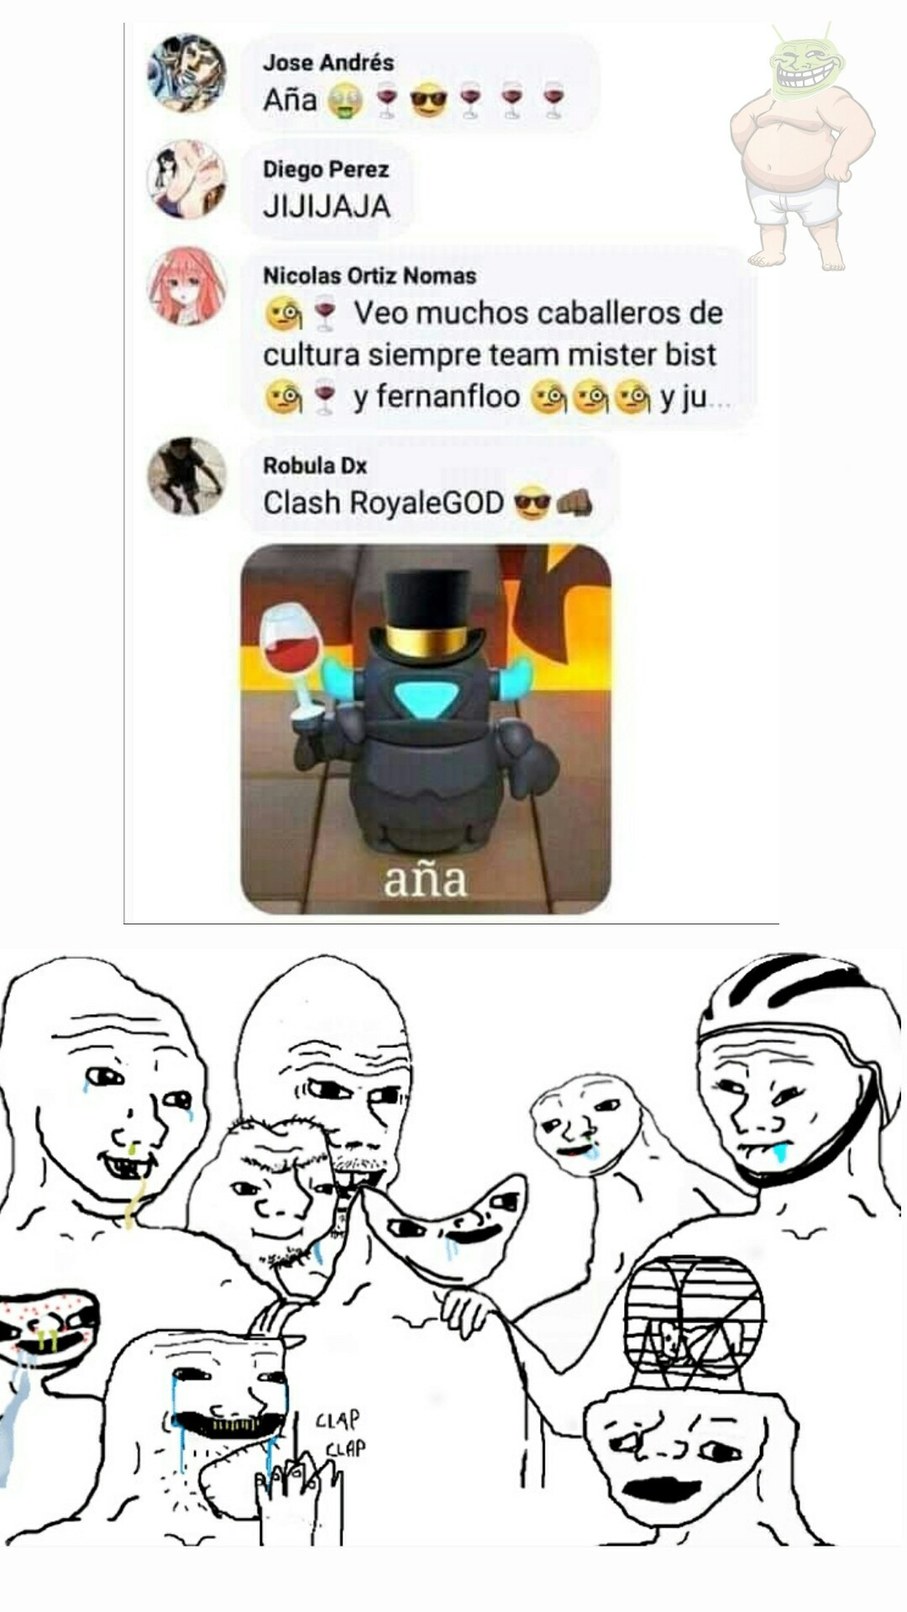 clash xddddd - meme